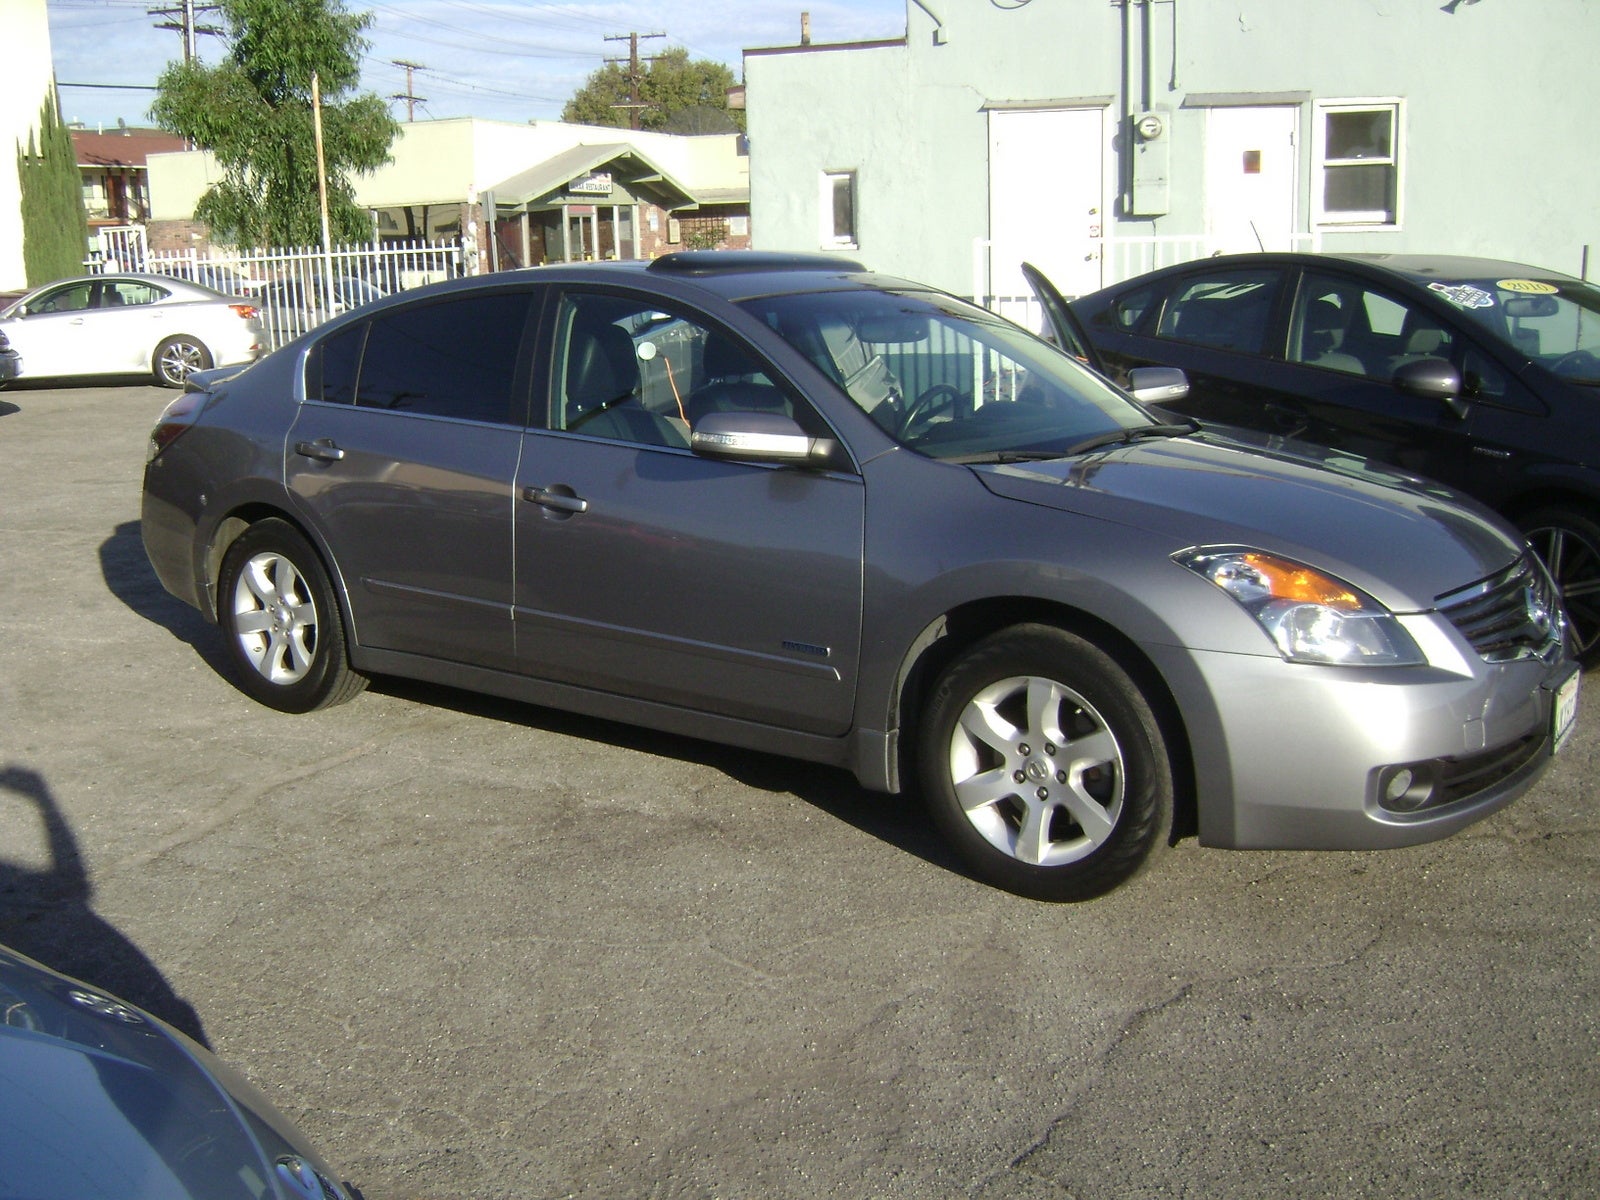 2009 Nissan altima hybrid warranty information #9